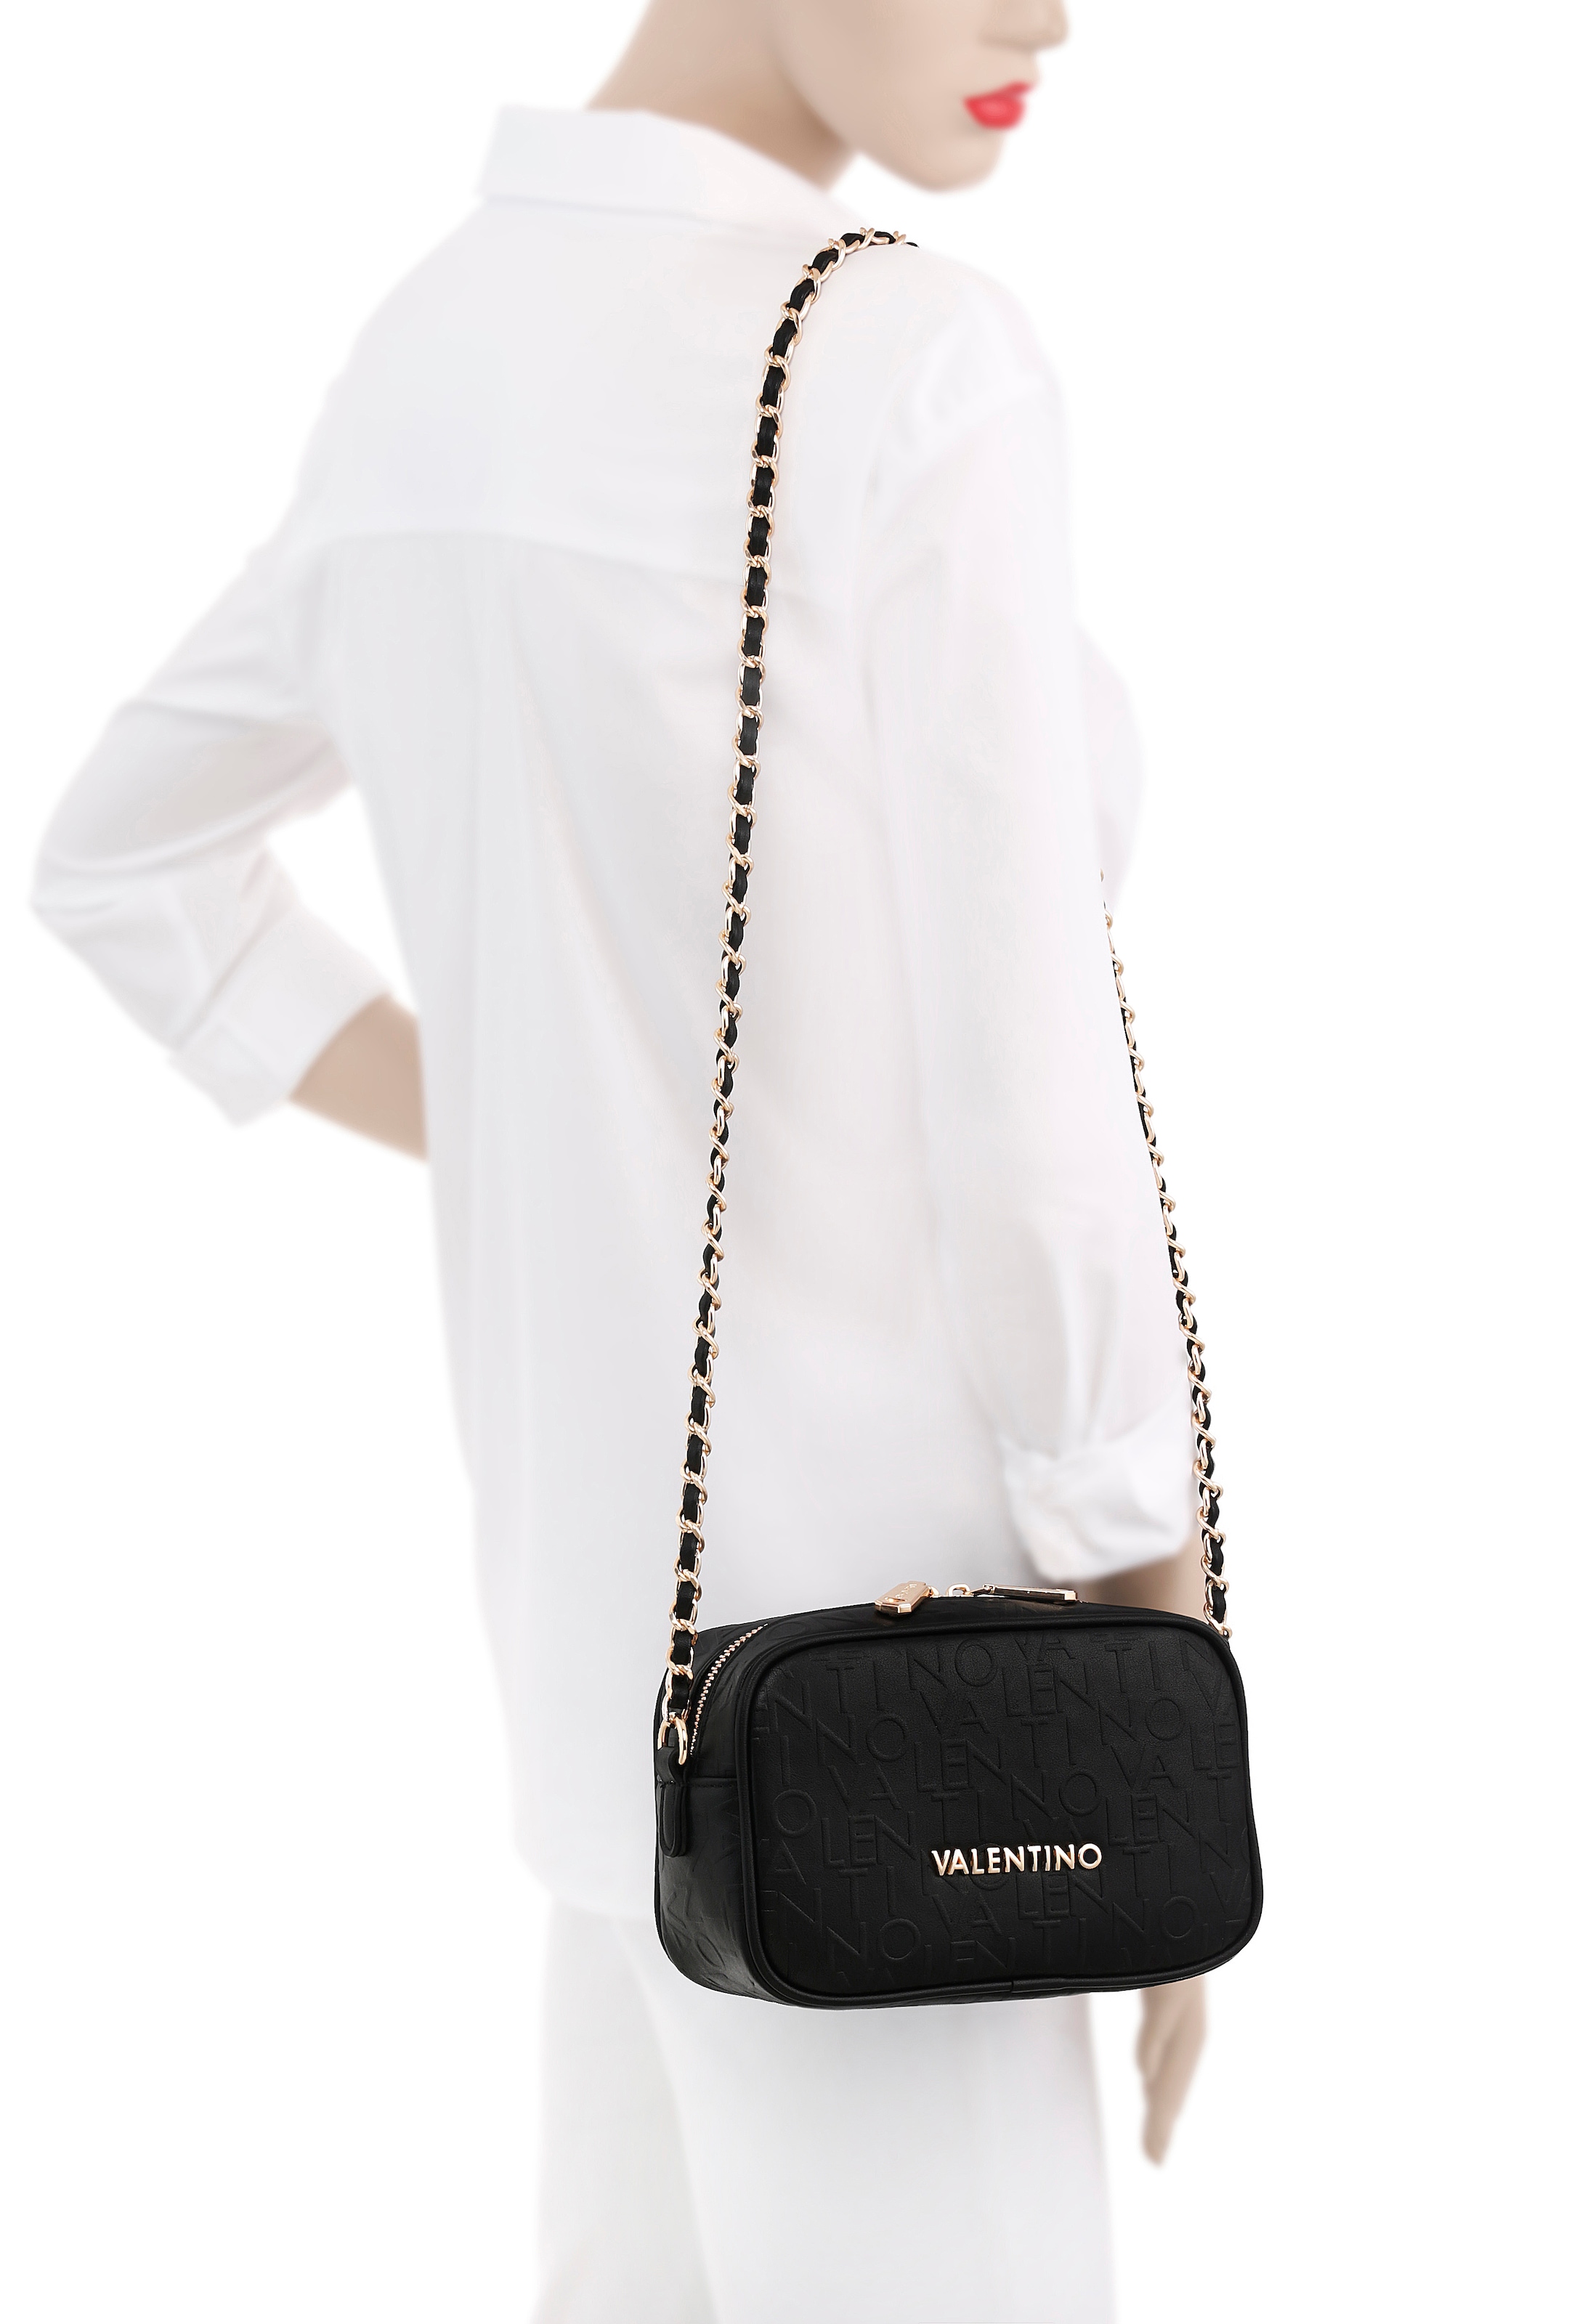 VALENTINO BAGS Mini Bag »RELAX«, Handtasche Damen Tasche Damen Schultertasche